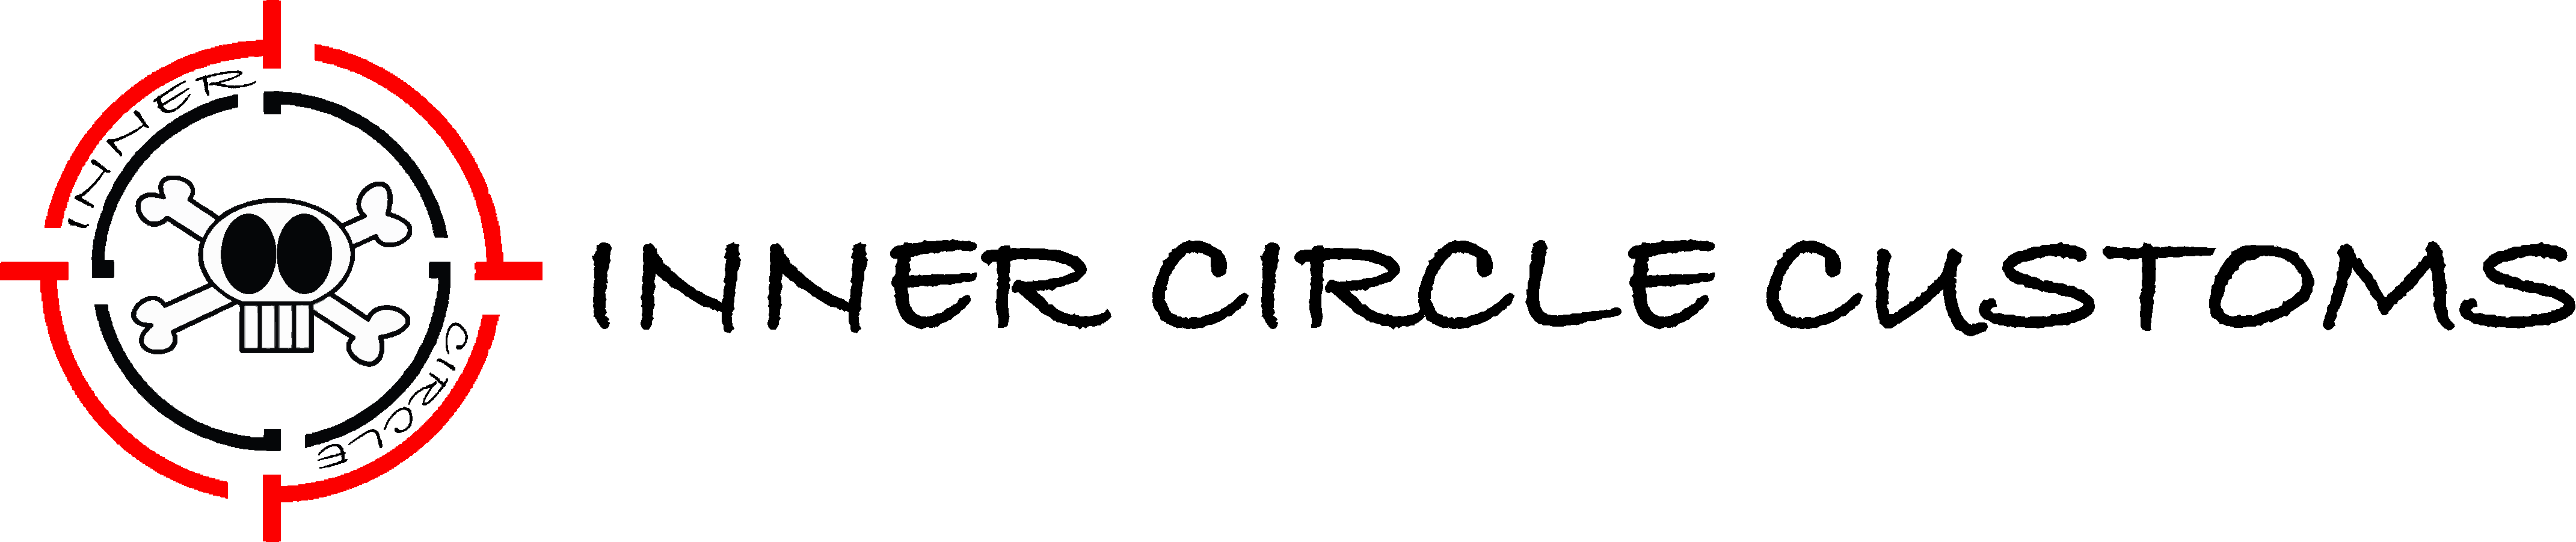 Inner Circle Customs Logo